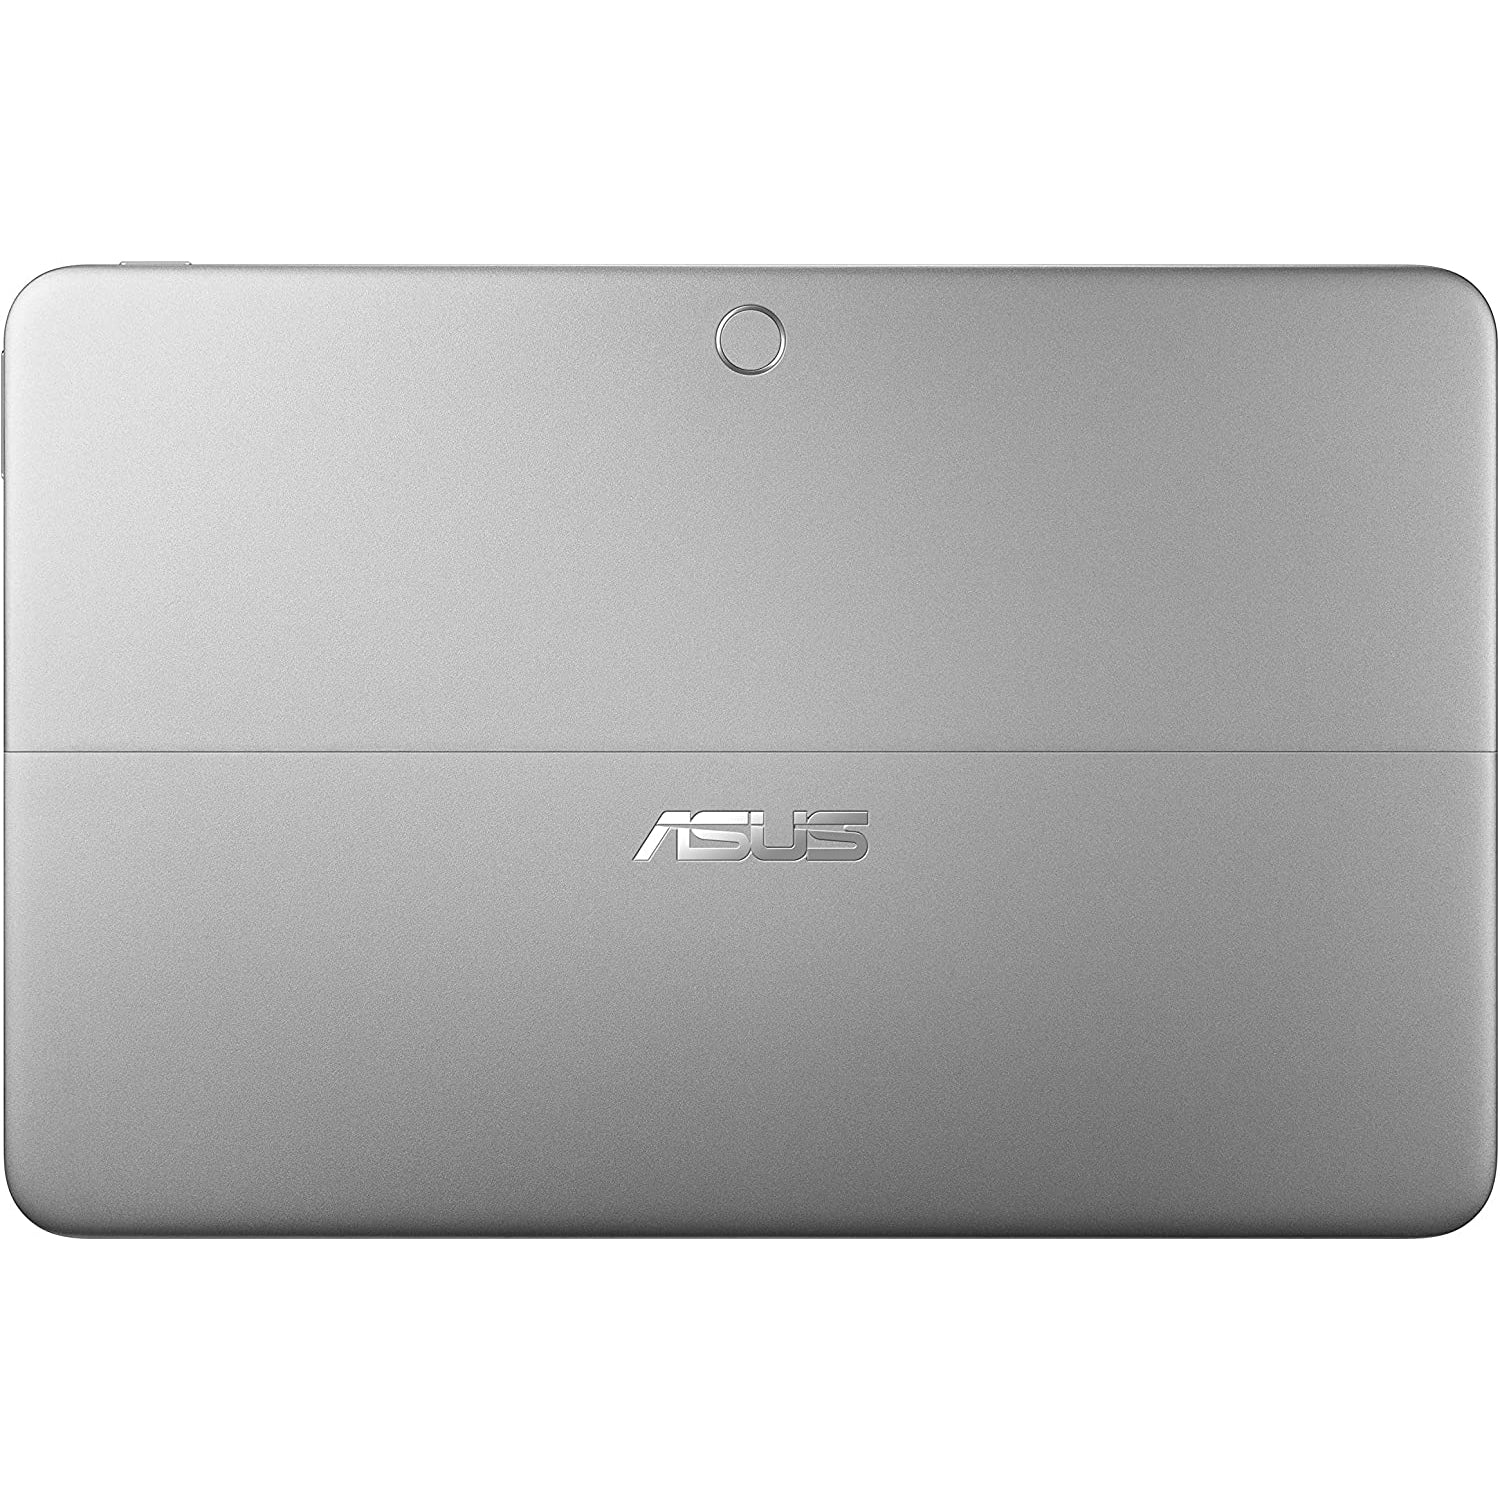 ASUS T102HA-GR035T 10.1 inch 2-in-1 Transformer Mini Tablet, Quartz Grey (Intel Atom X5-Z8350 Processor, 4 GB RAM, 64 GB eMMC, Windows 10)